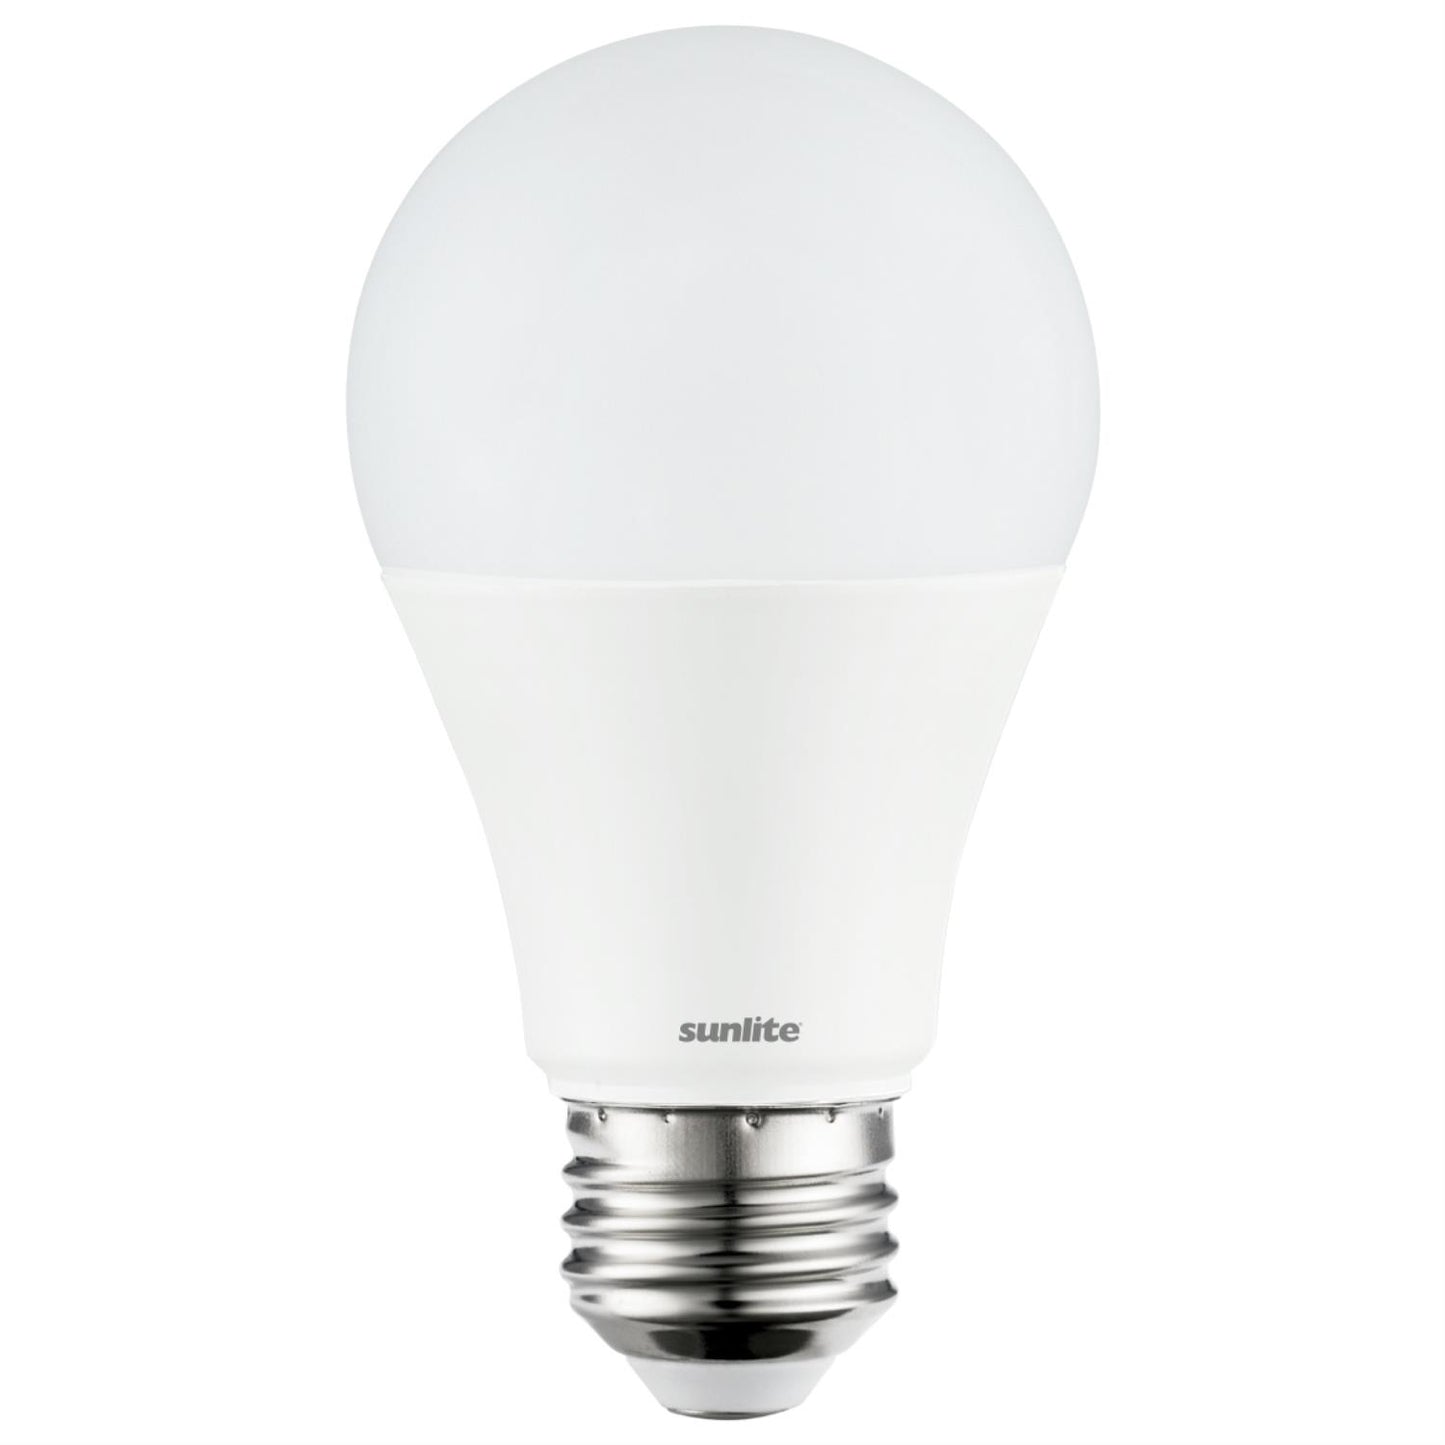 Sunlite 80597-SU LED A19 Super Bright Light Bulb, Dimmable, 14 Watt (100 Watt Equivalent), 1500 Lumens, Medium (E26) Base, UL Listed, 30K - Warm White 1 Pack